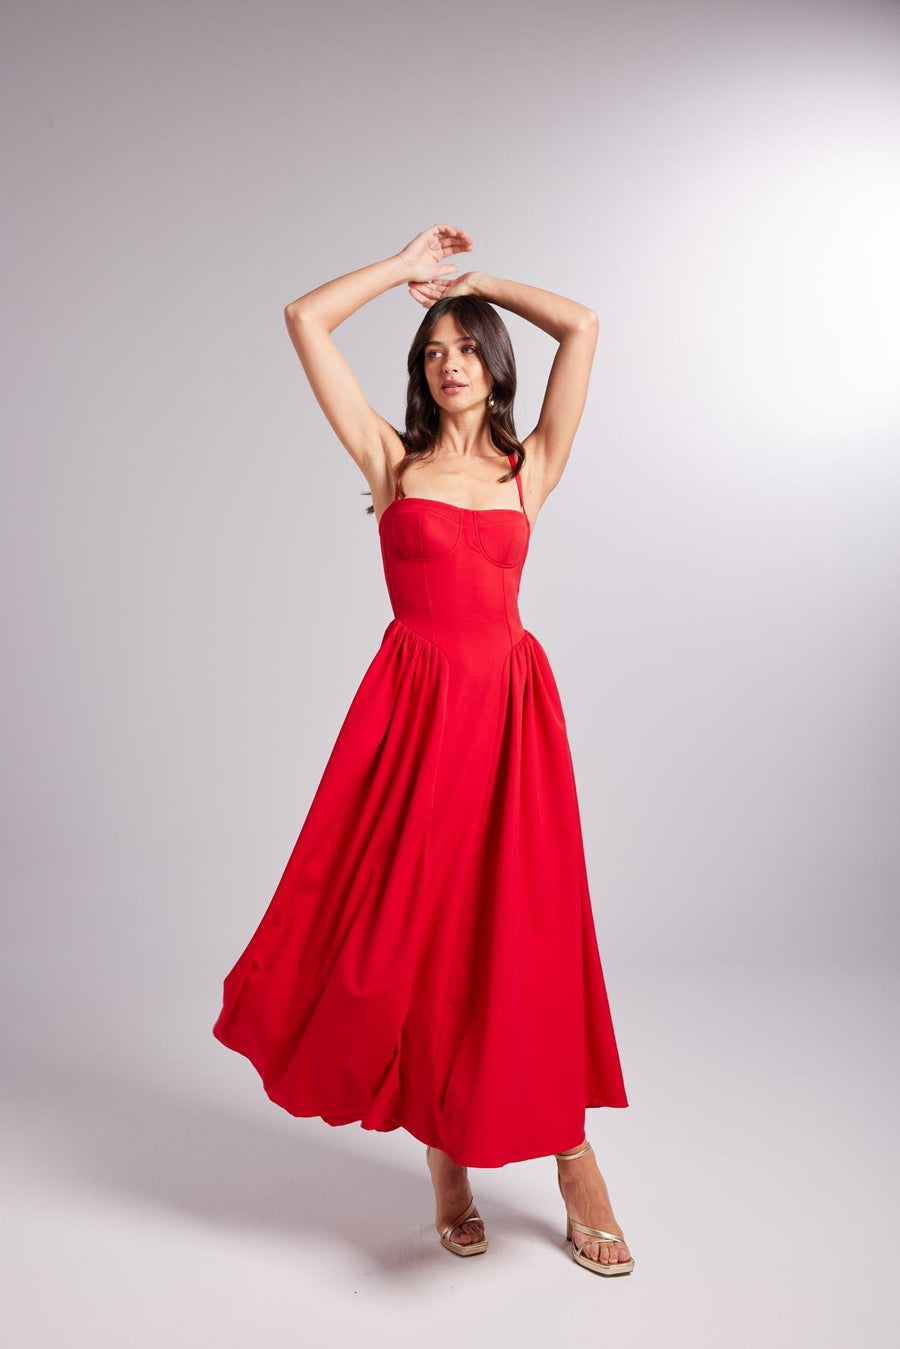 Bridged Dress Red Porterist - 2